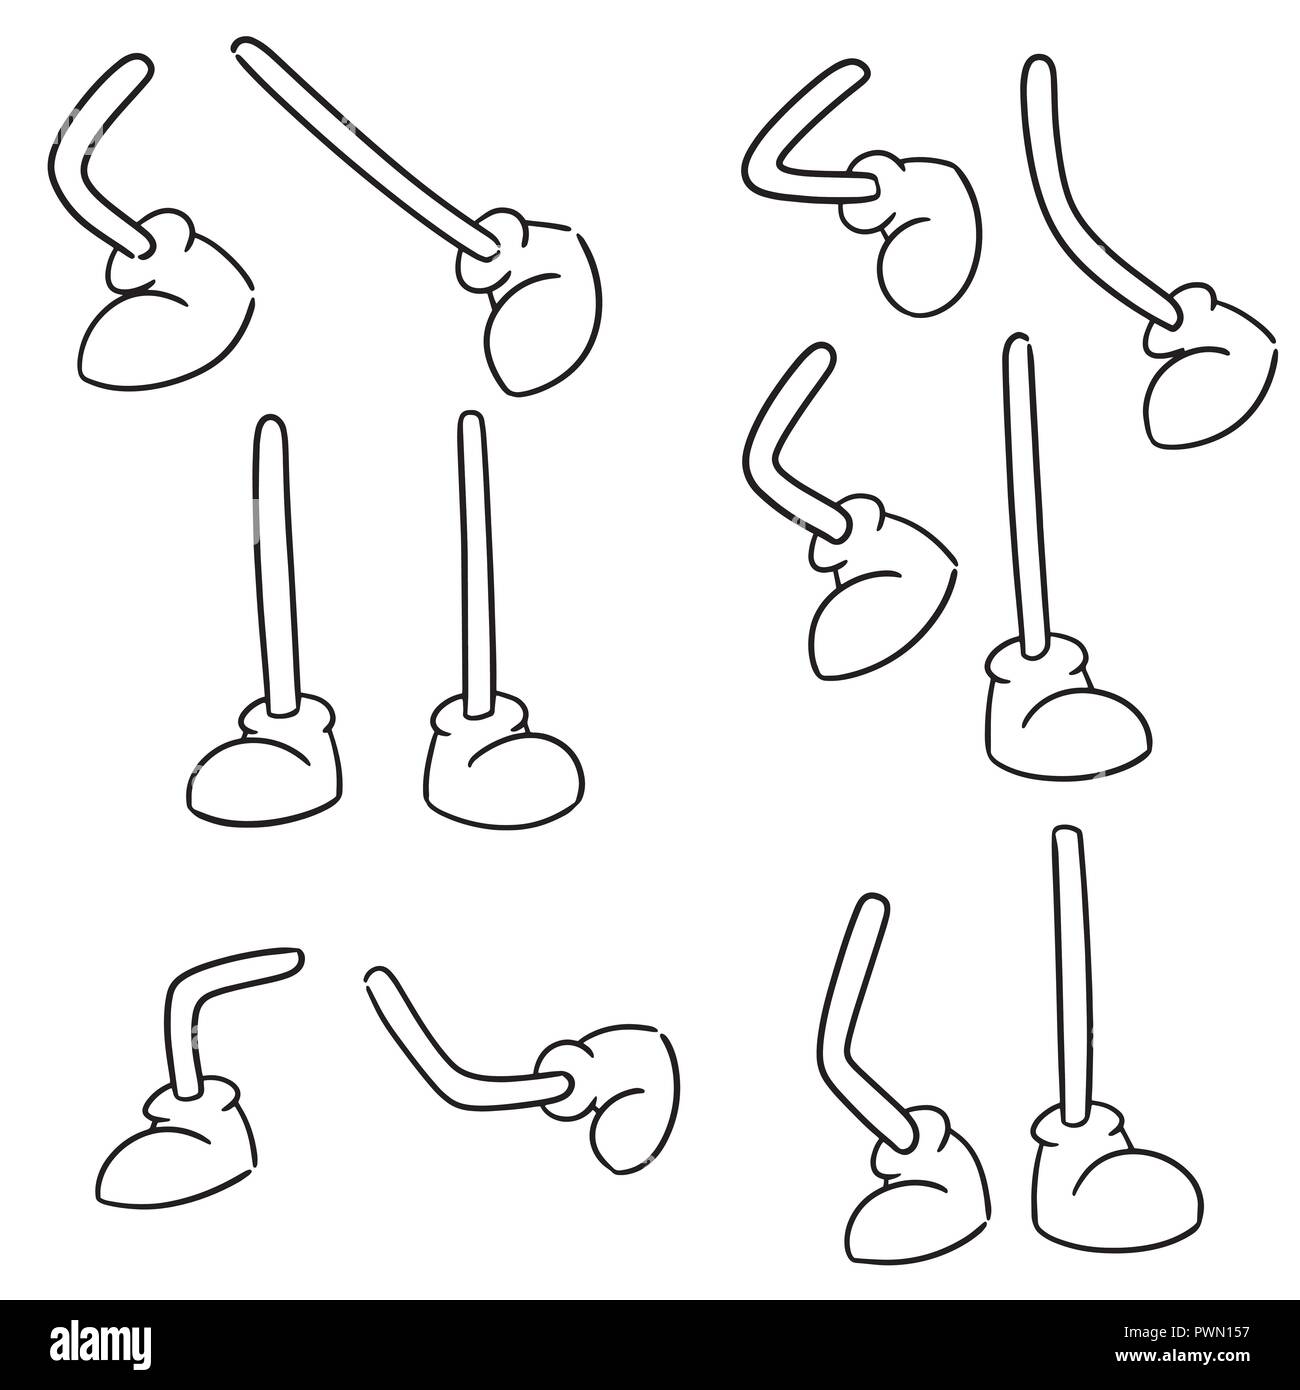 Cartoon leg Black and White Stock Photos & Images - Alamy